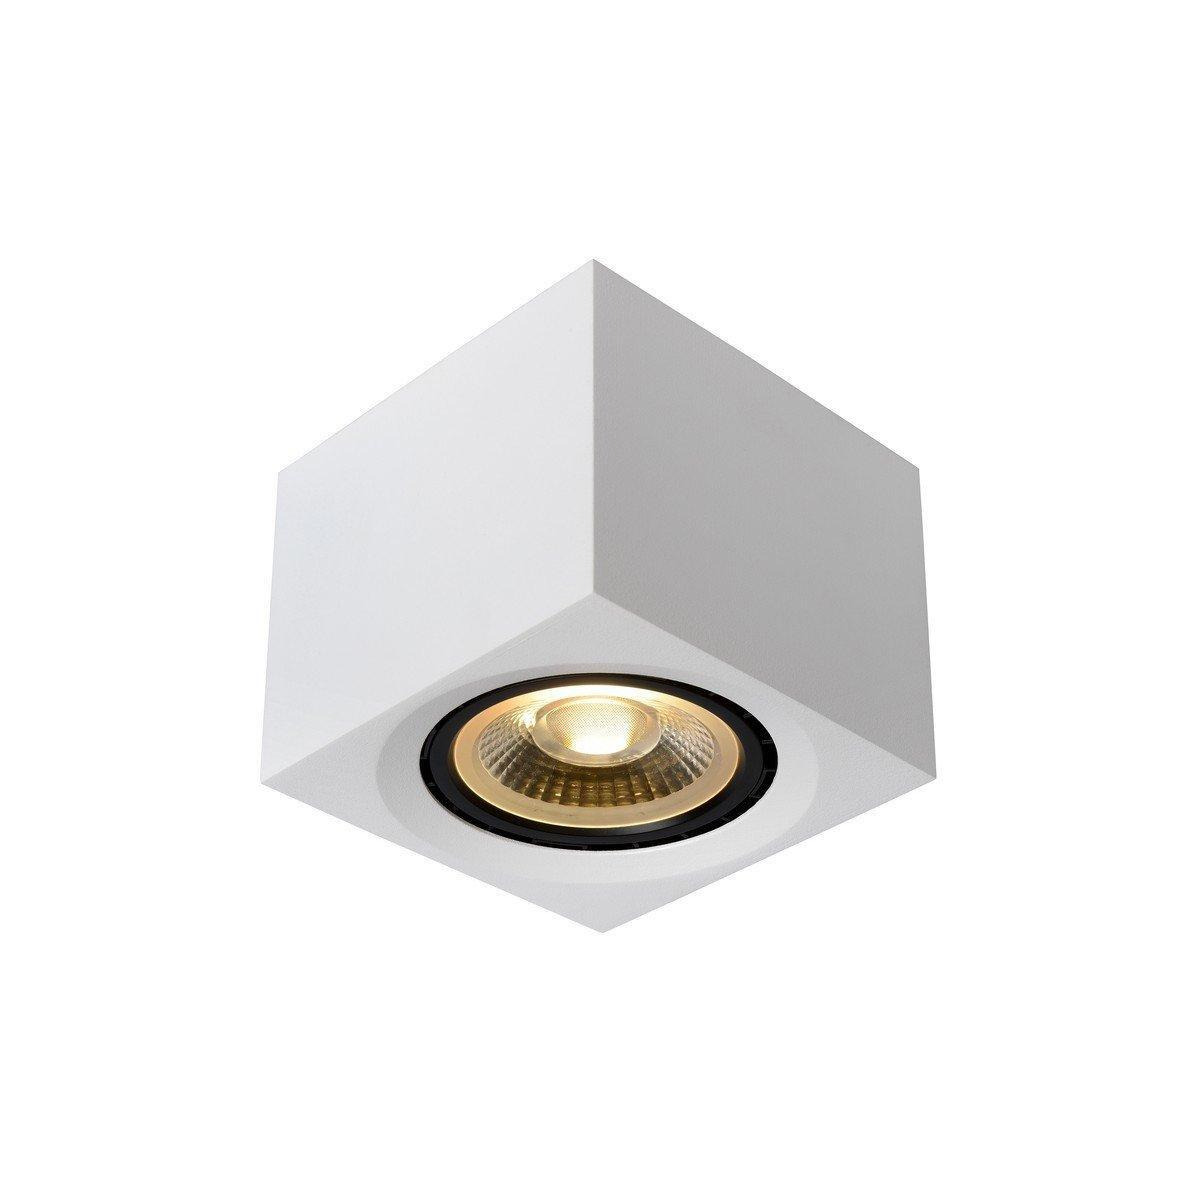 Lucide Fedler Modern Surface Mounted Ceiling Spotlight LED Dim to warm GU10 1x12W 2200K3000K White - image 1